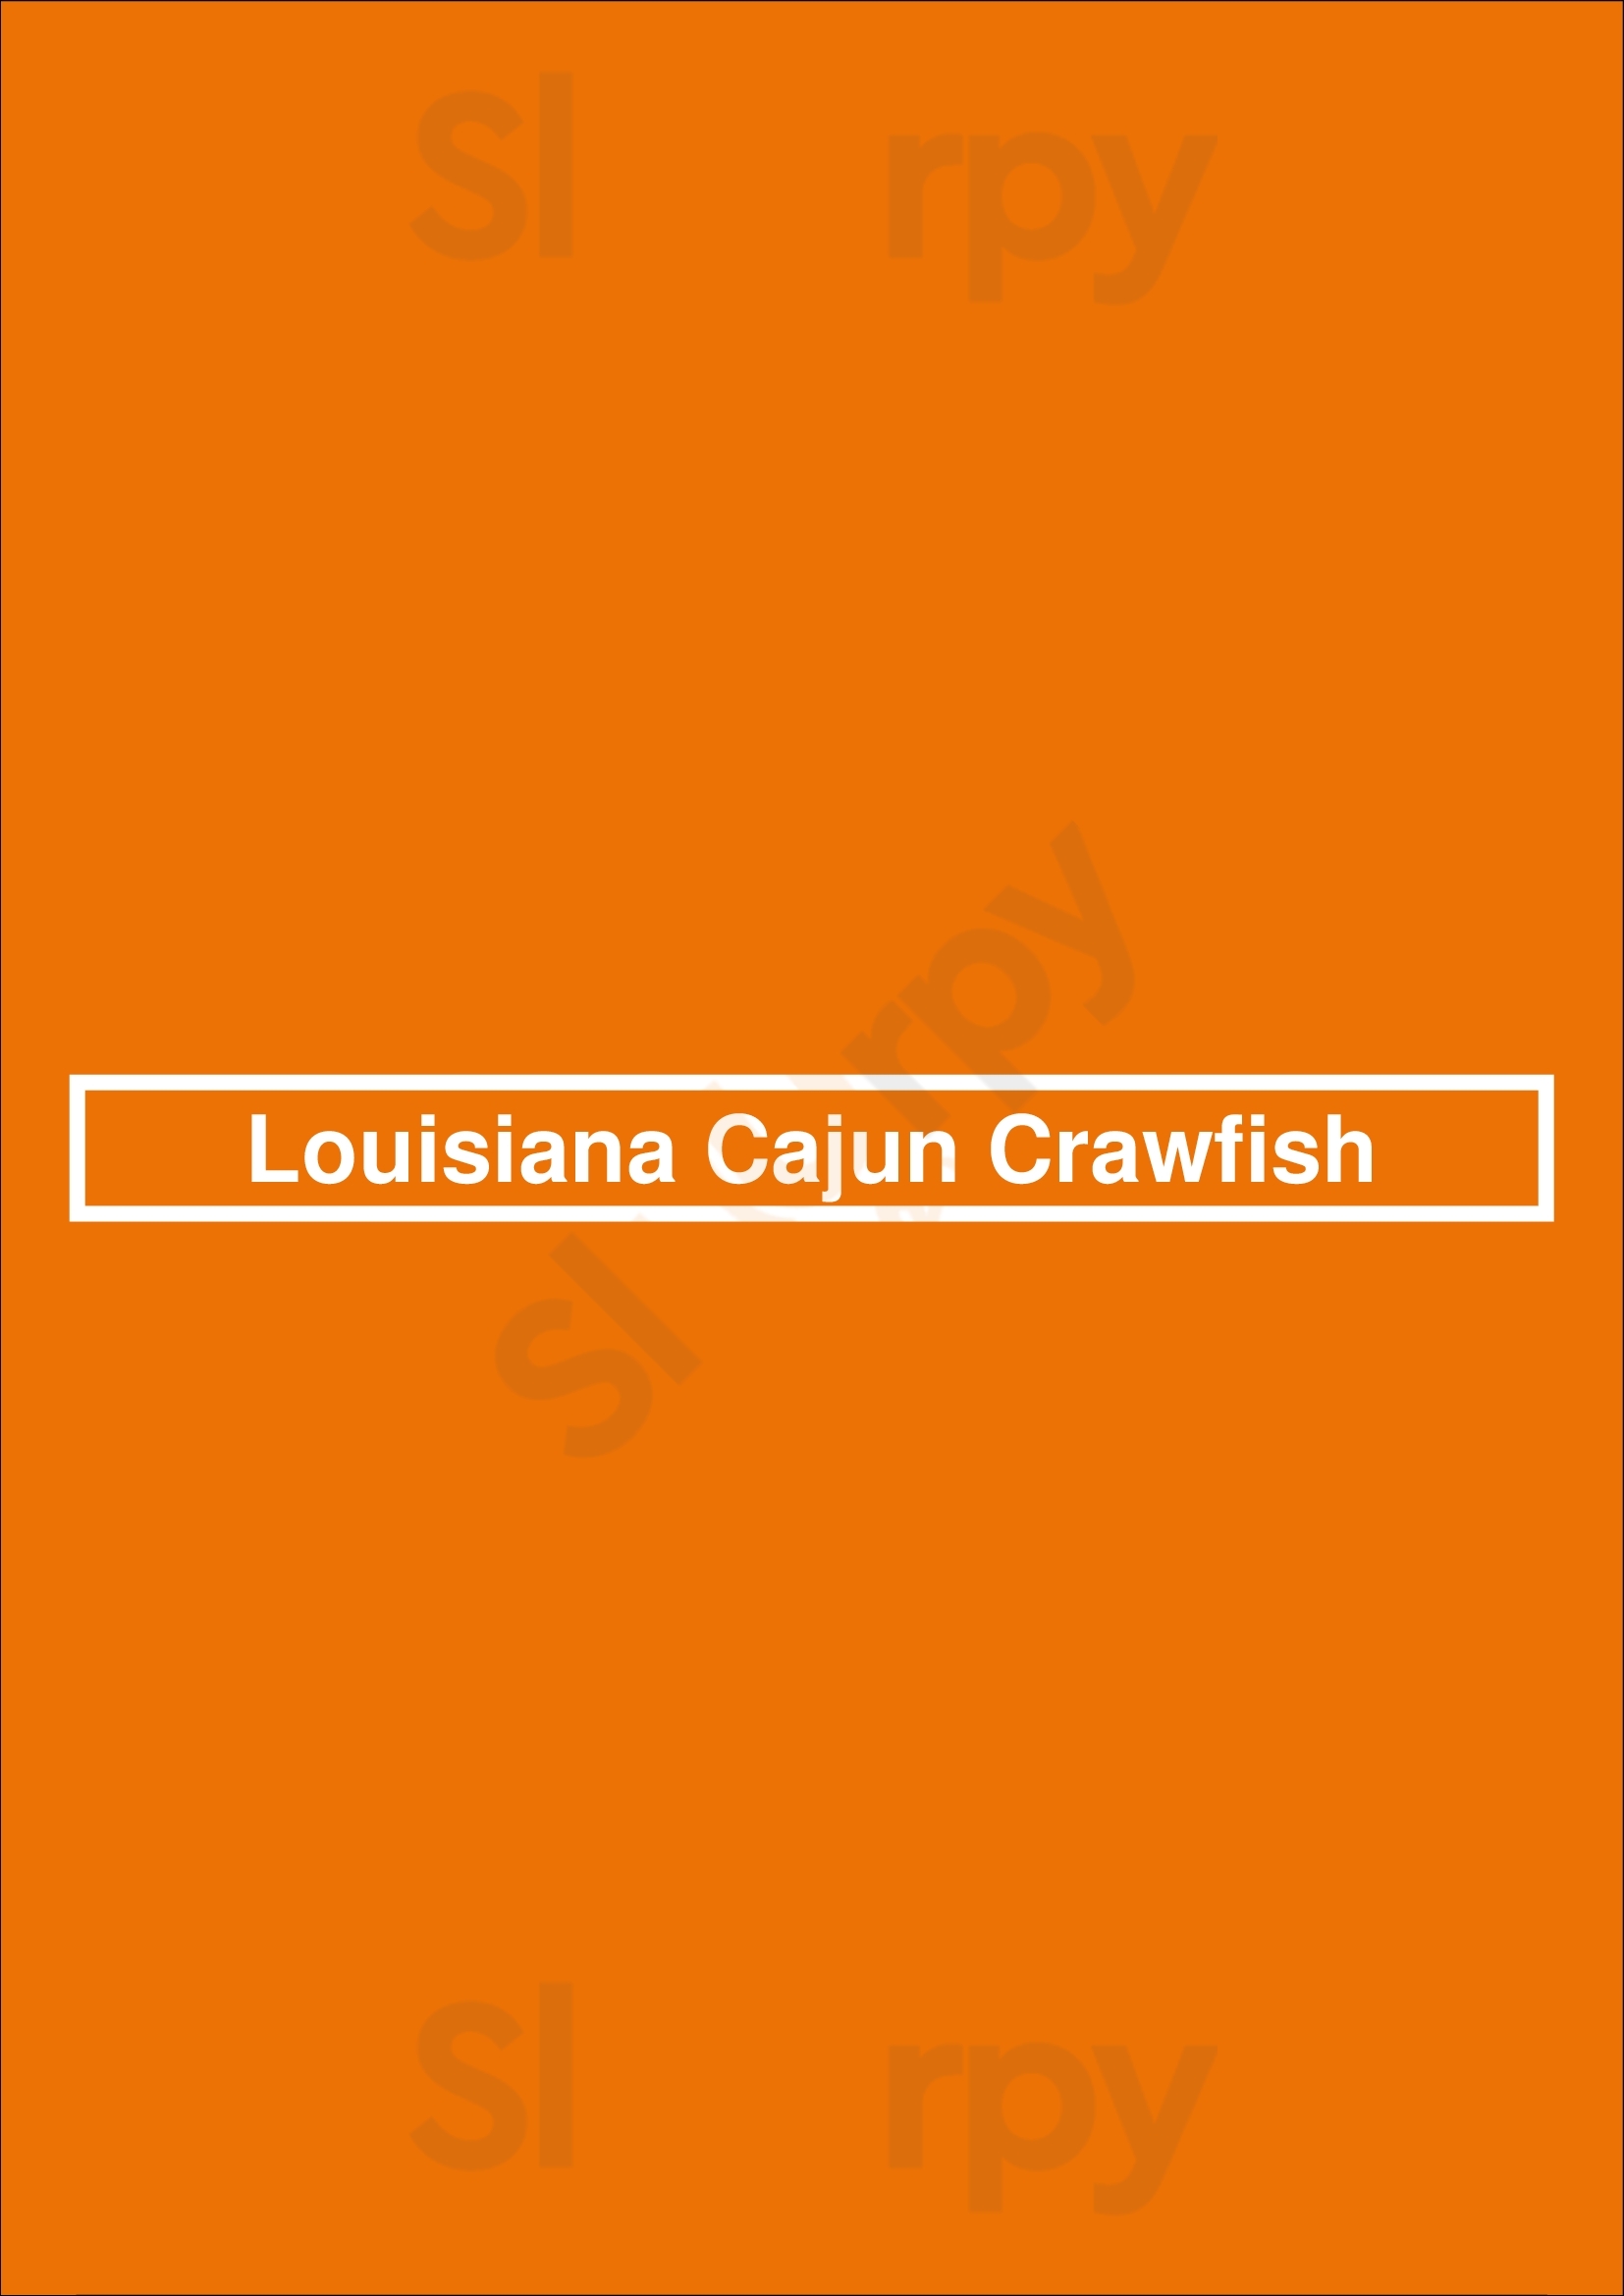 Louisiana Cajun Crawfish Houston Menu - 1